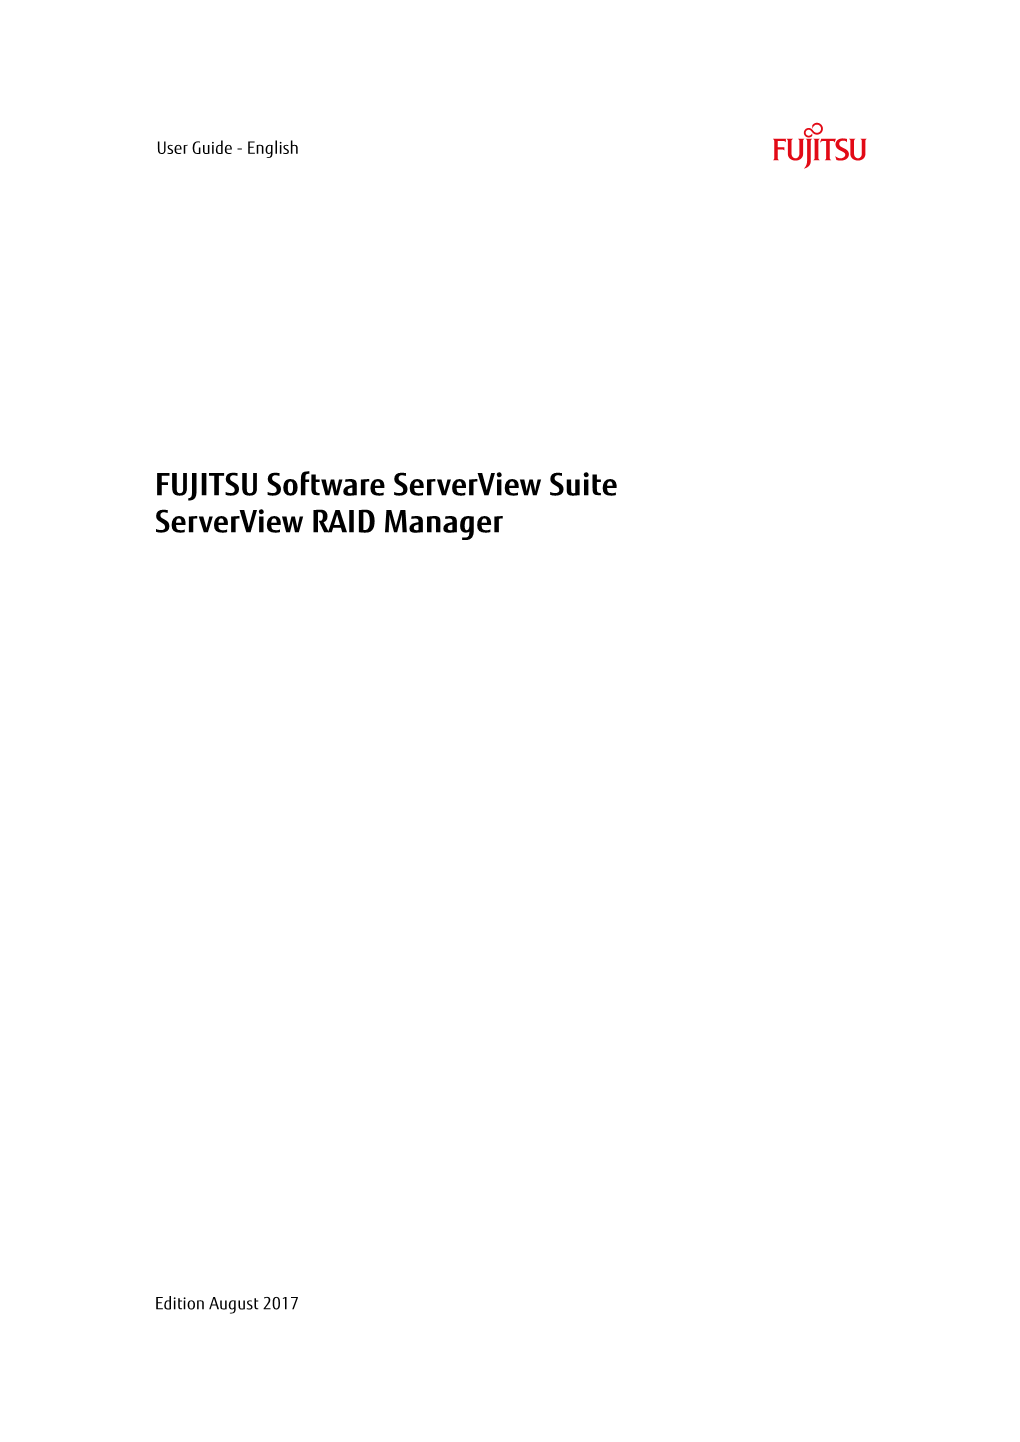 Serverview RAID Manager